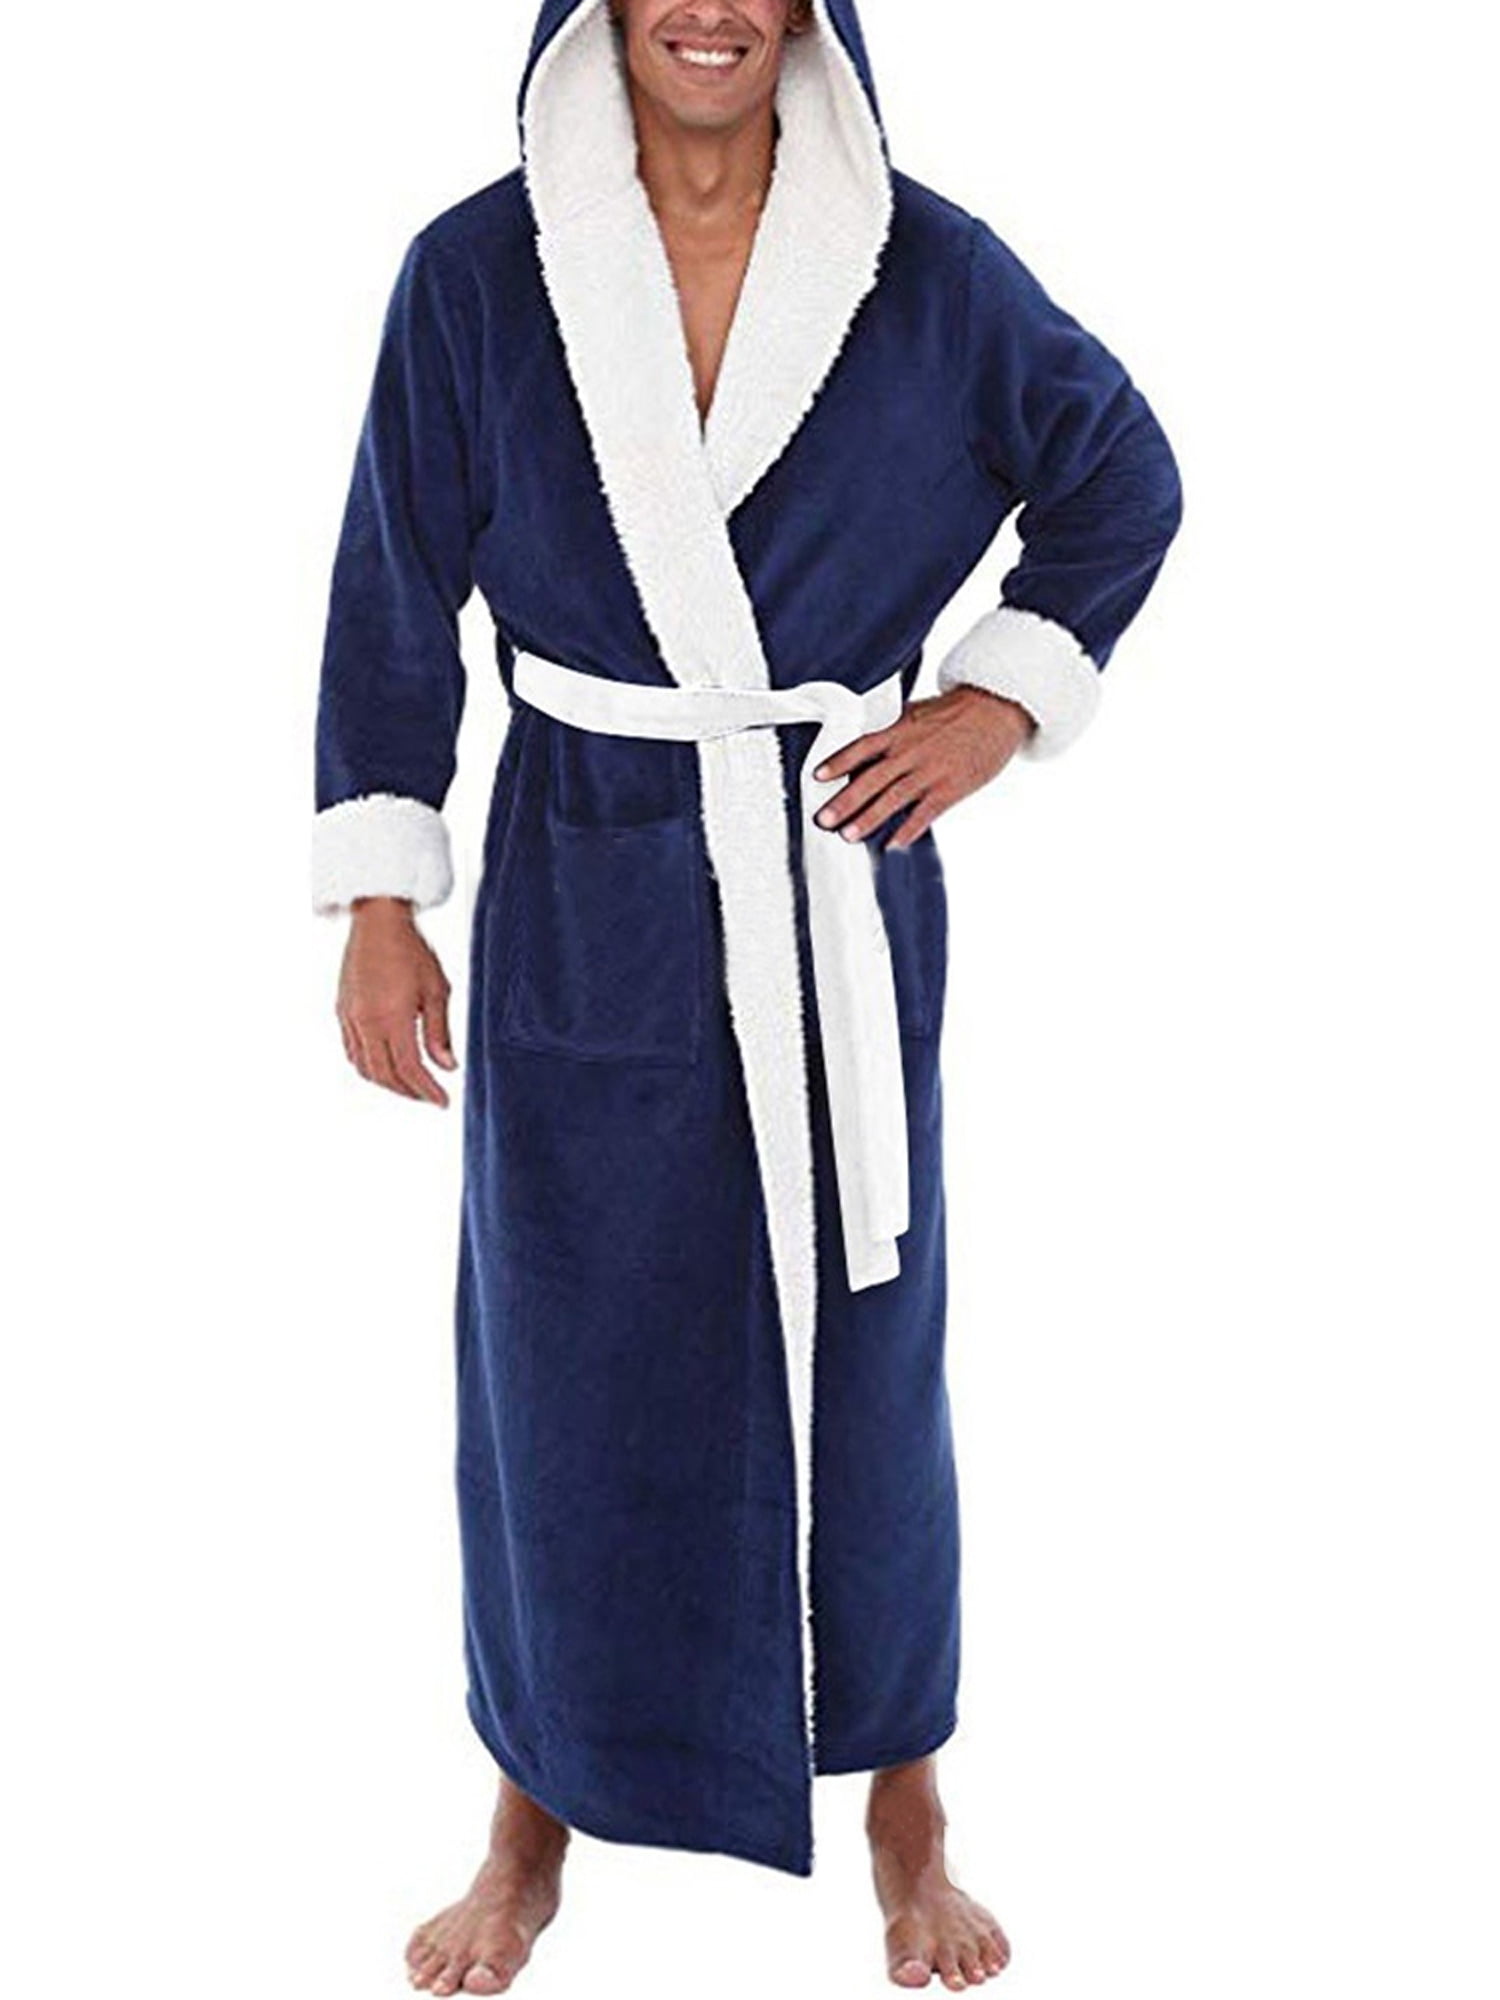 Mens Super Soft Fleece Hooded Bath Robe Dressing Gown Black/Blue Size M L XL XXL 